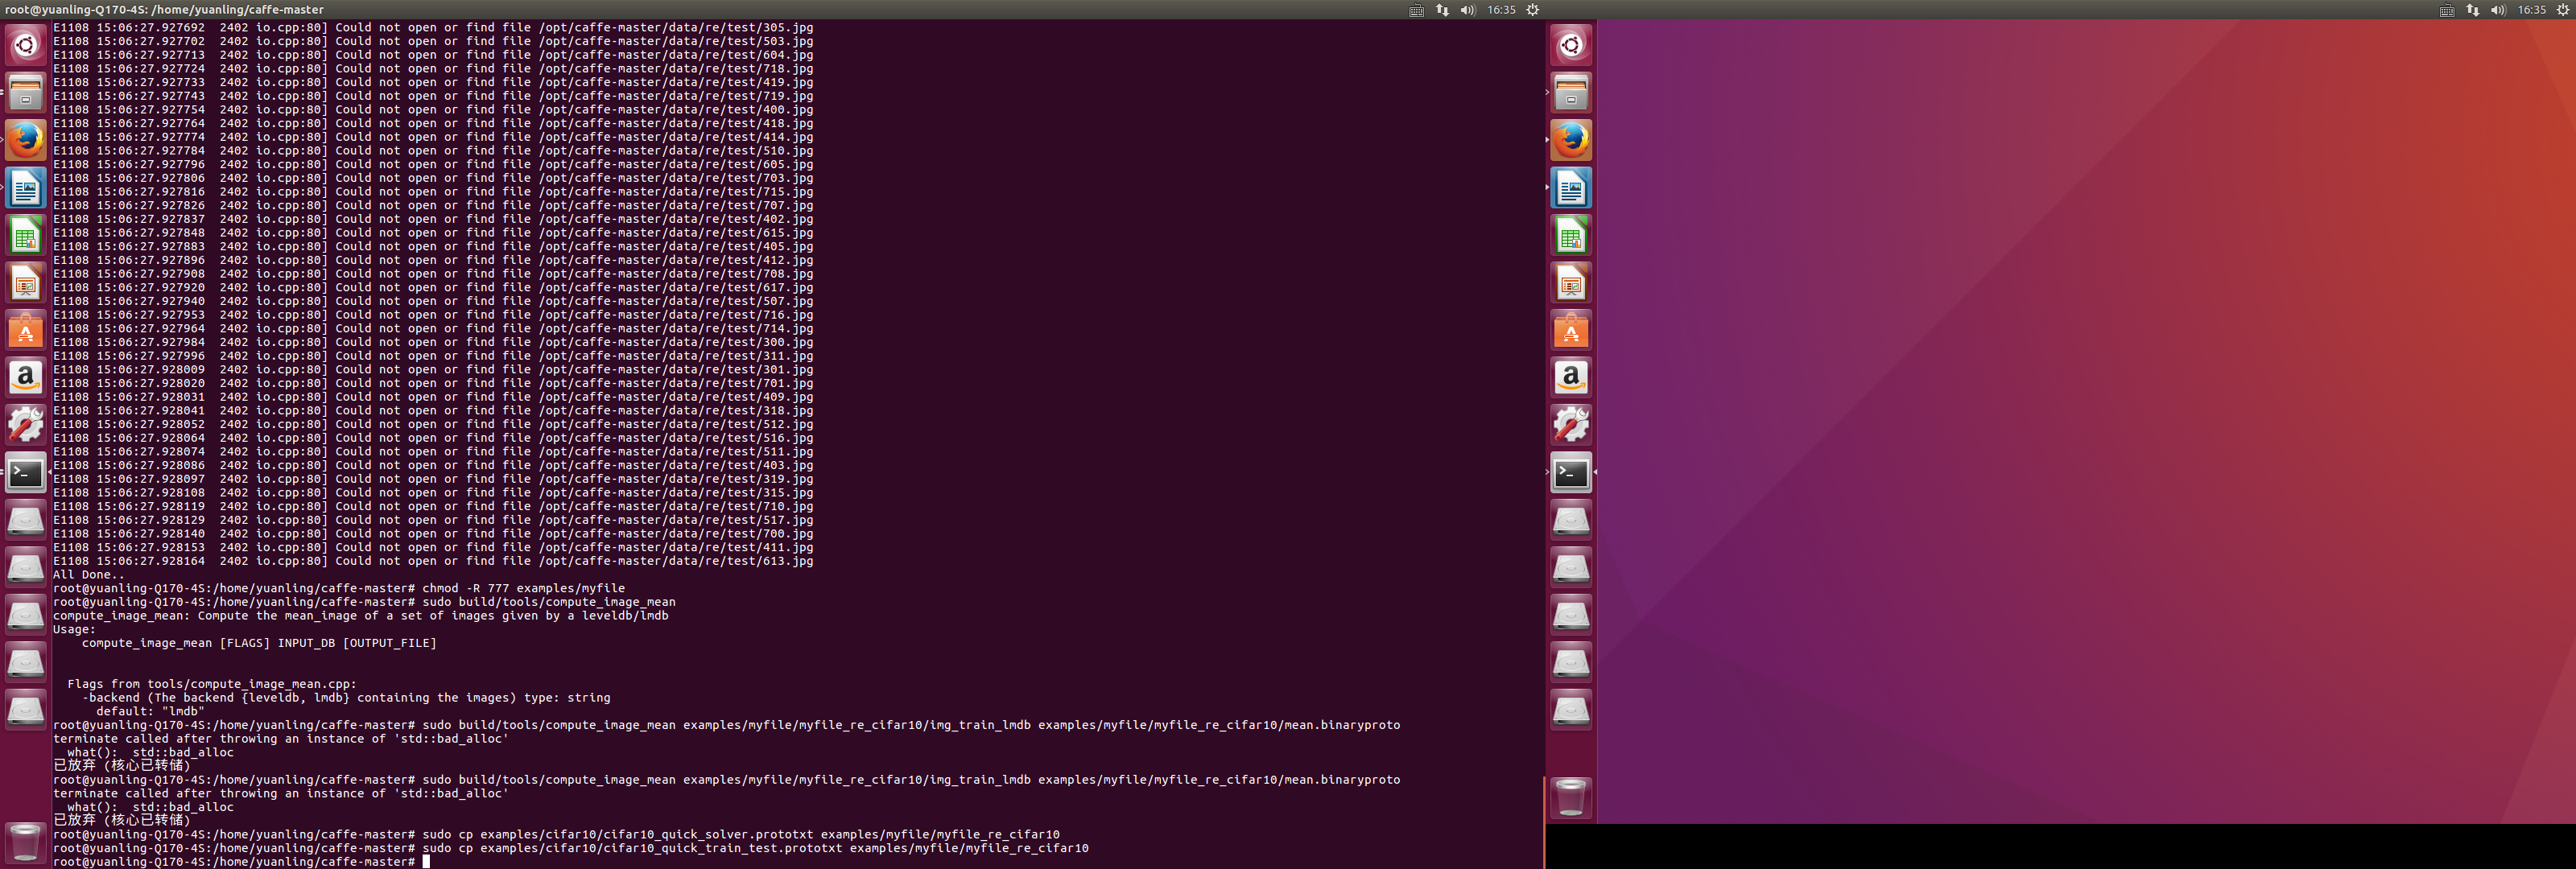 请问用Ubuntu16.04,安装了Anaconda2和MAtla